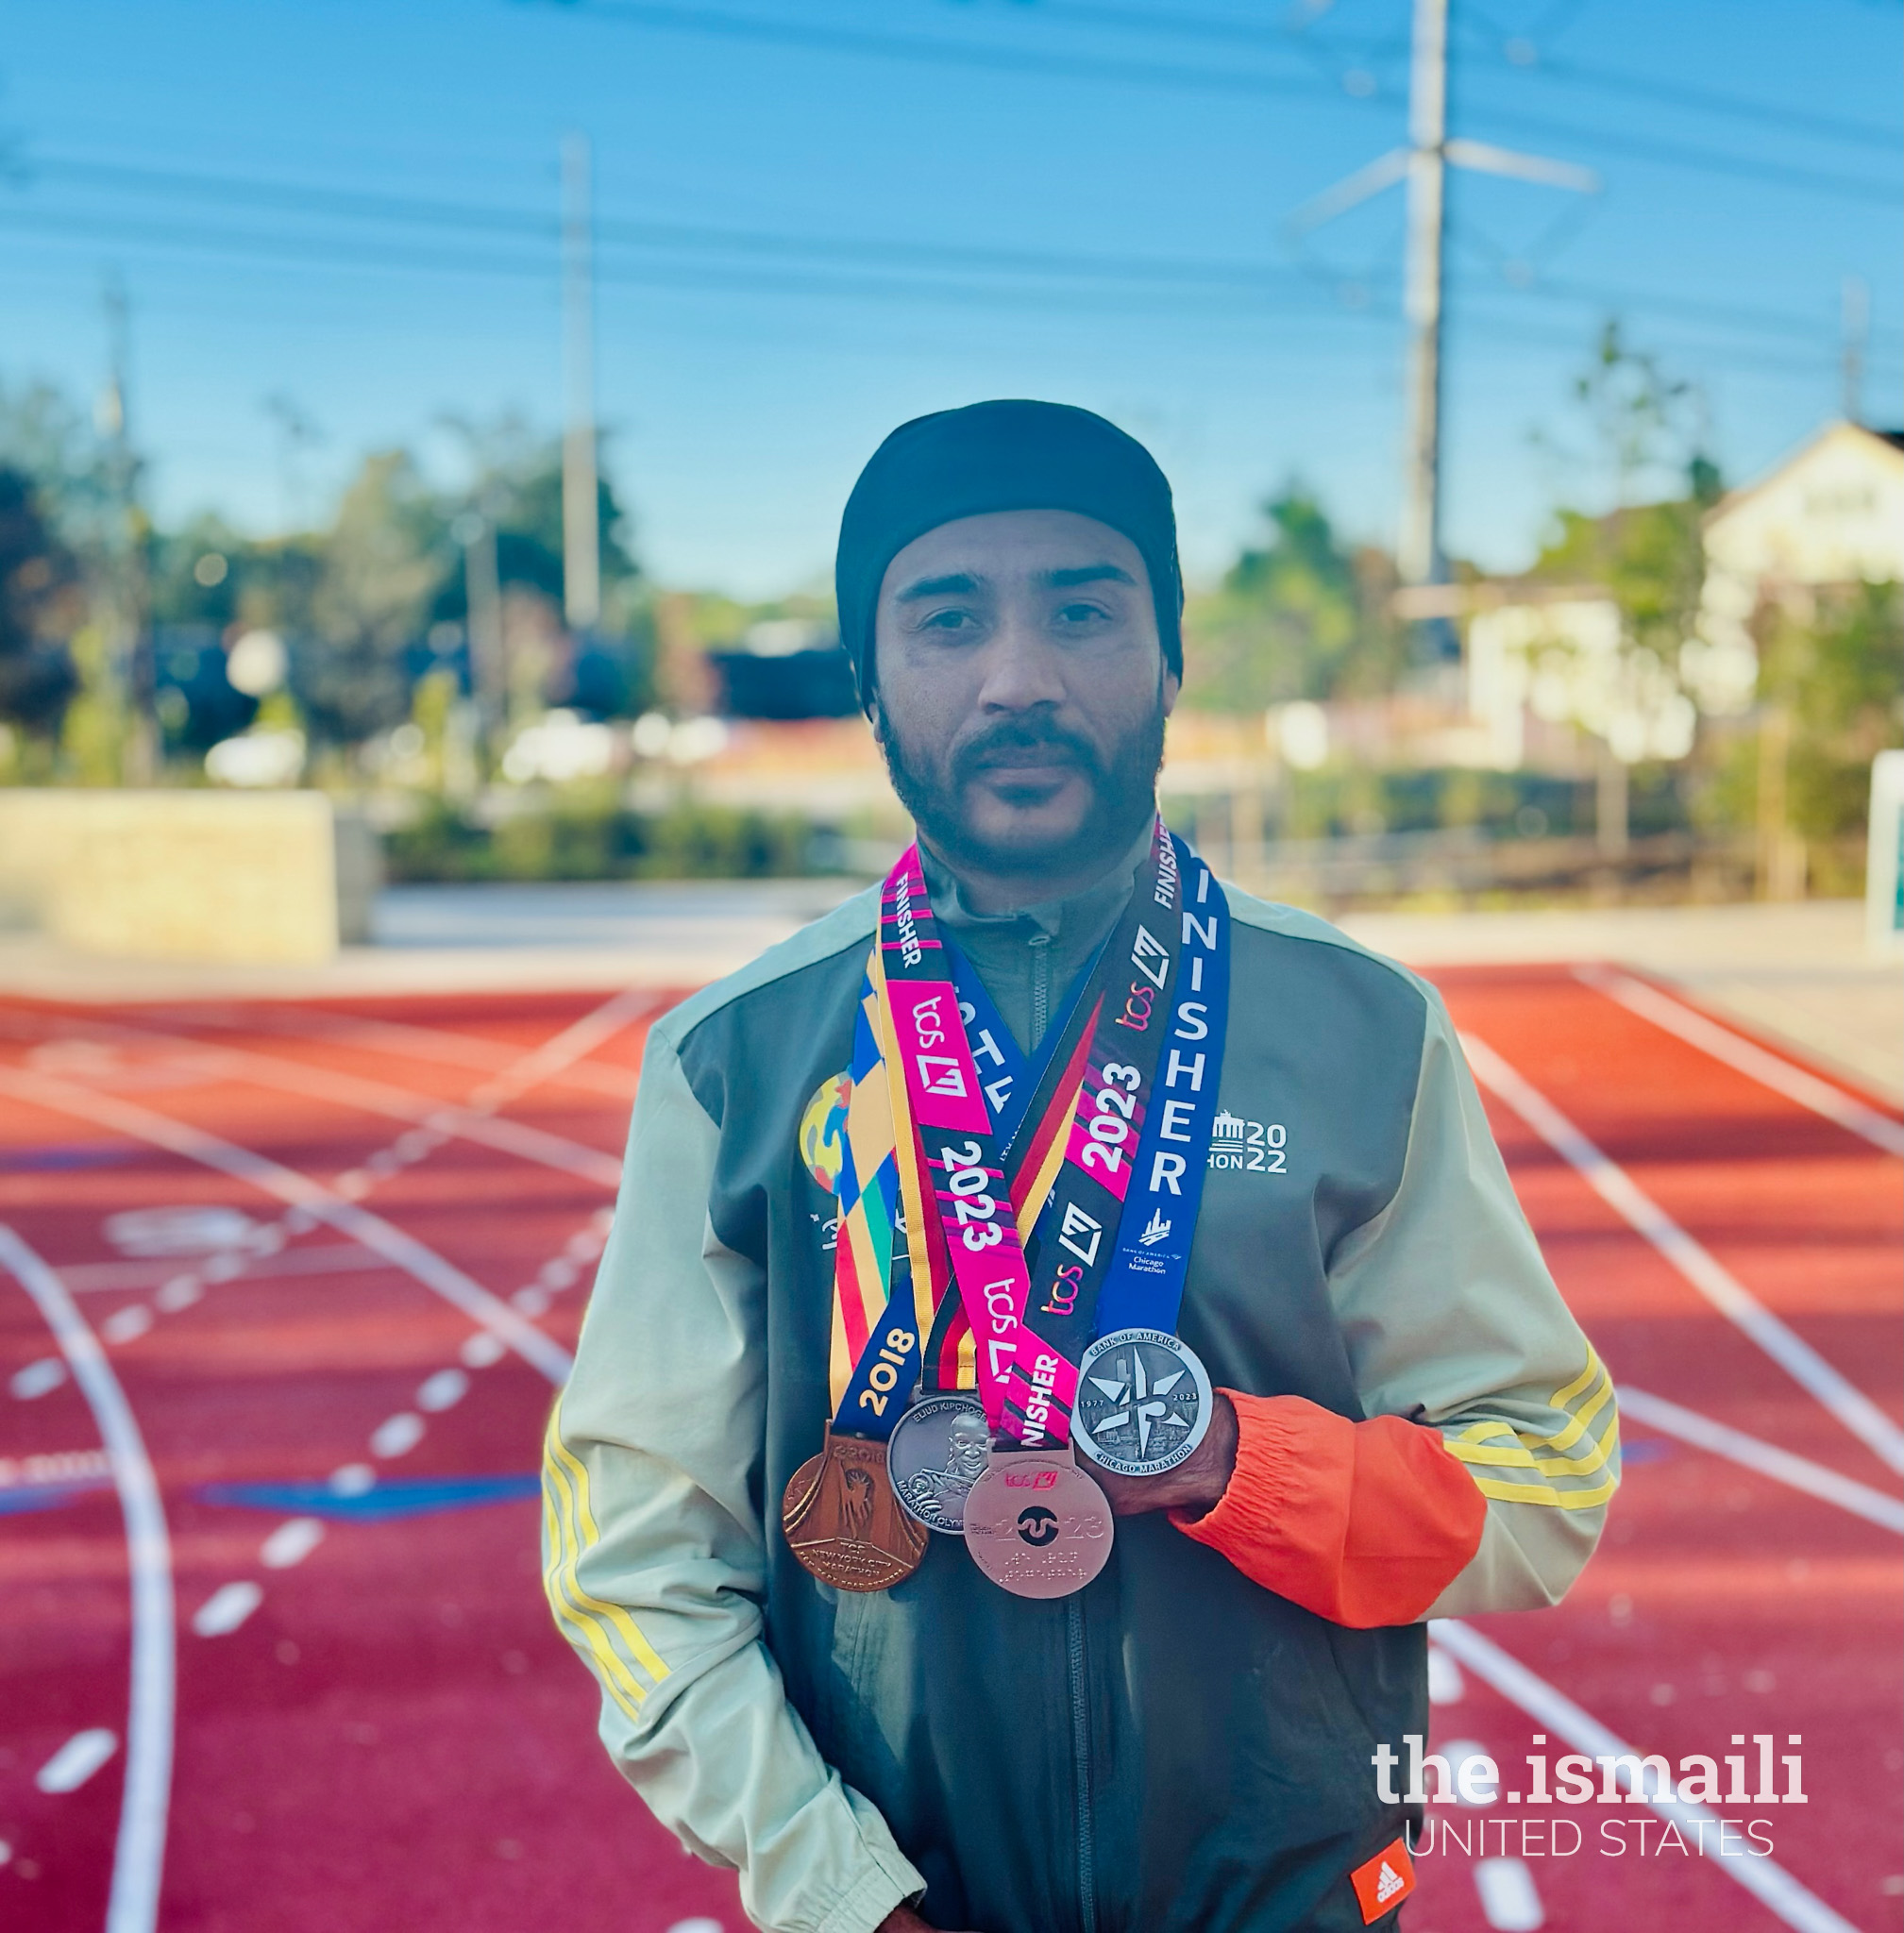 Track day with Nizar wearing major marathon medals. 